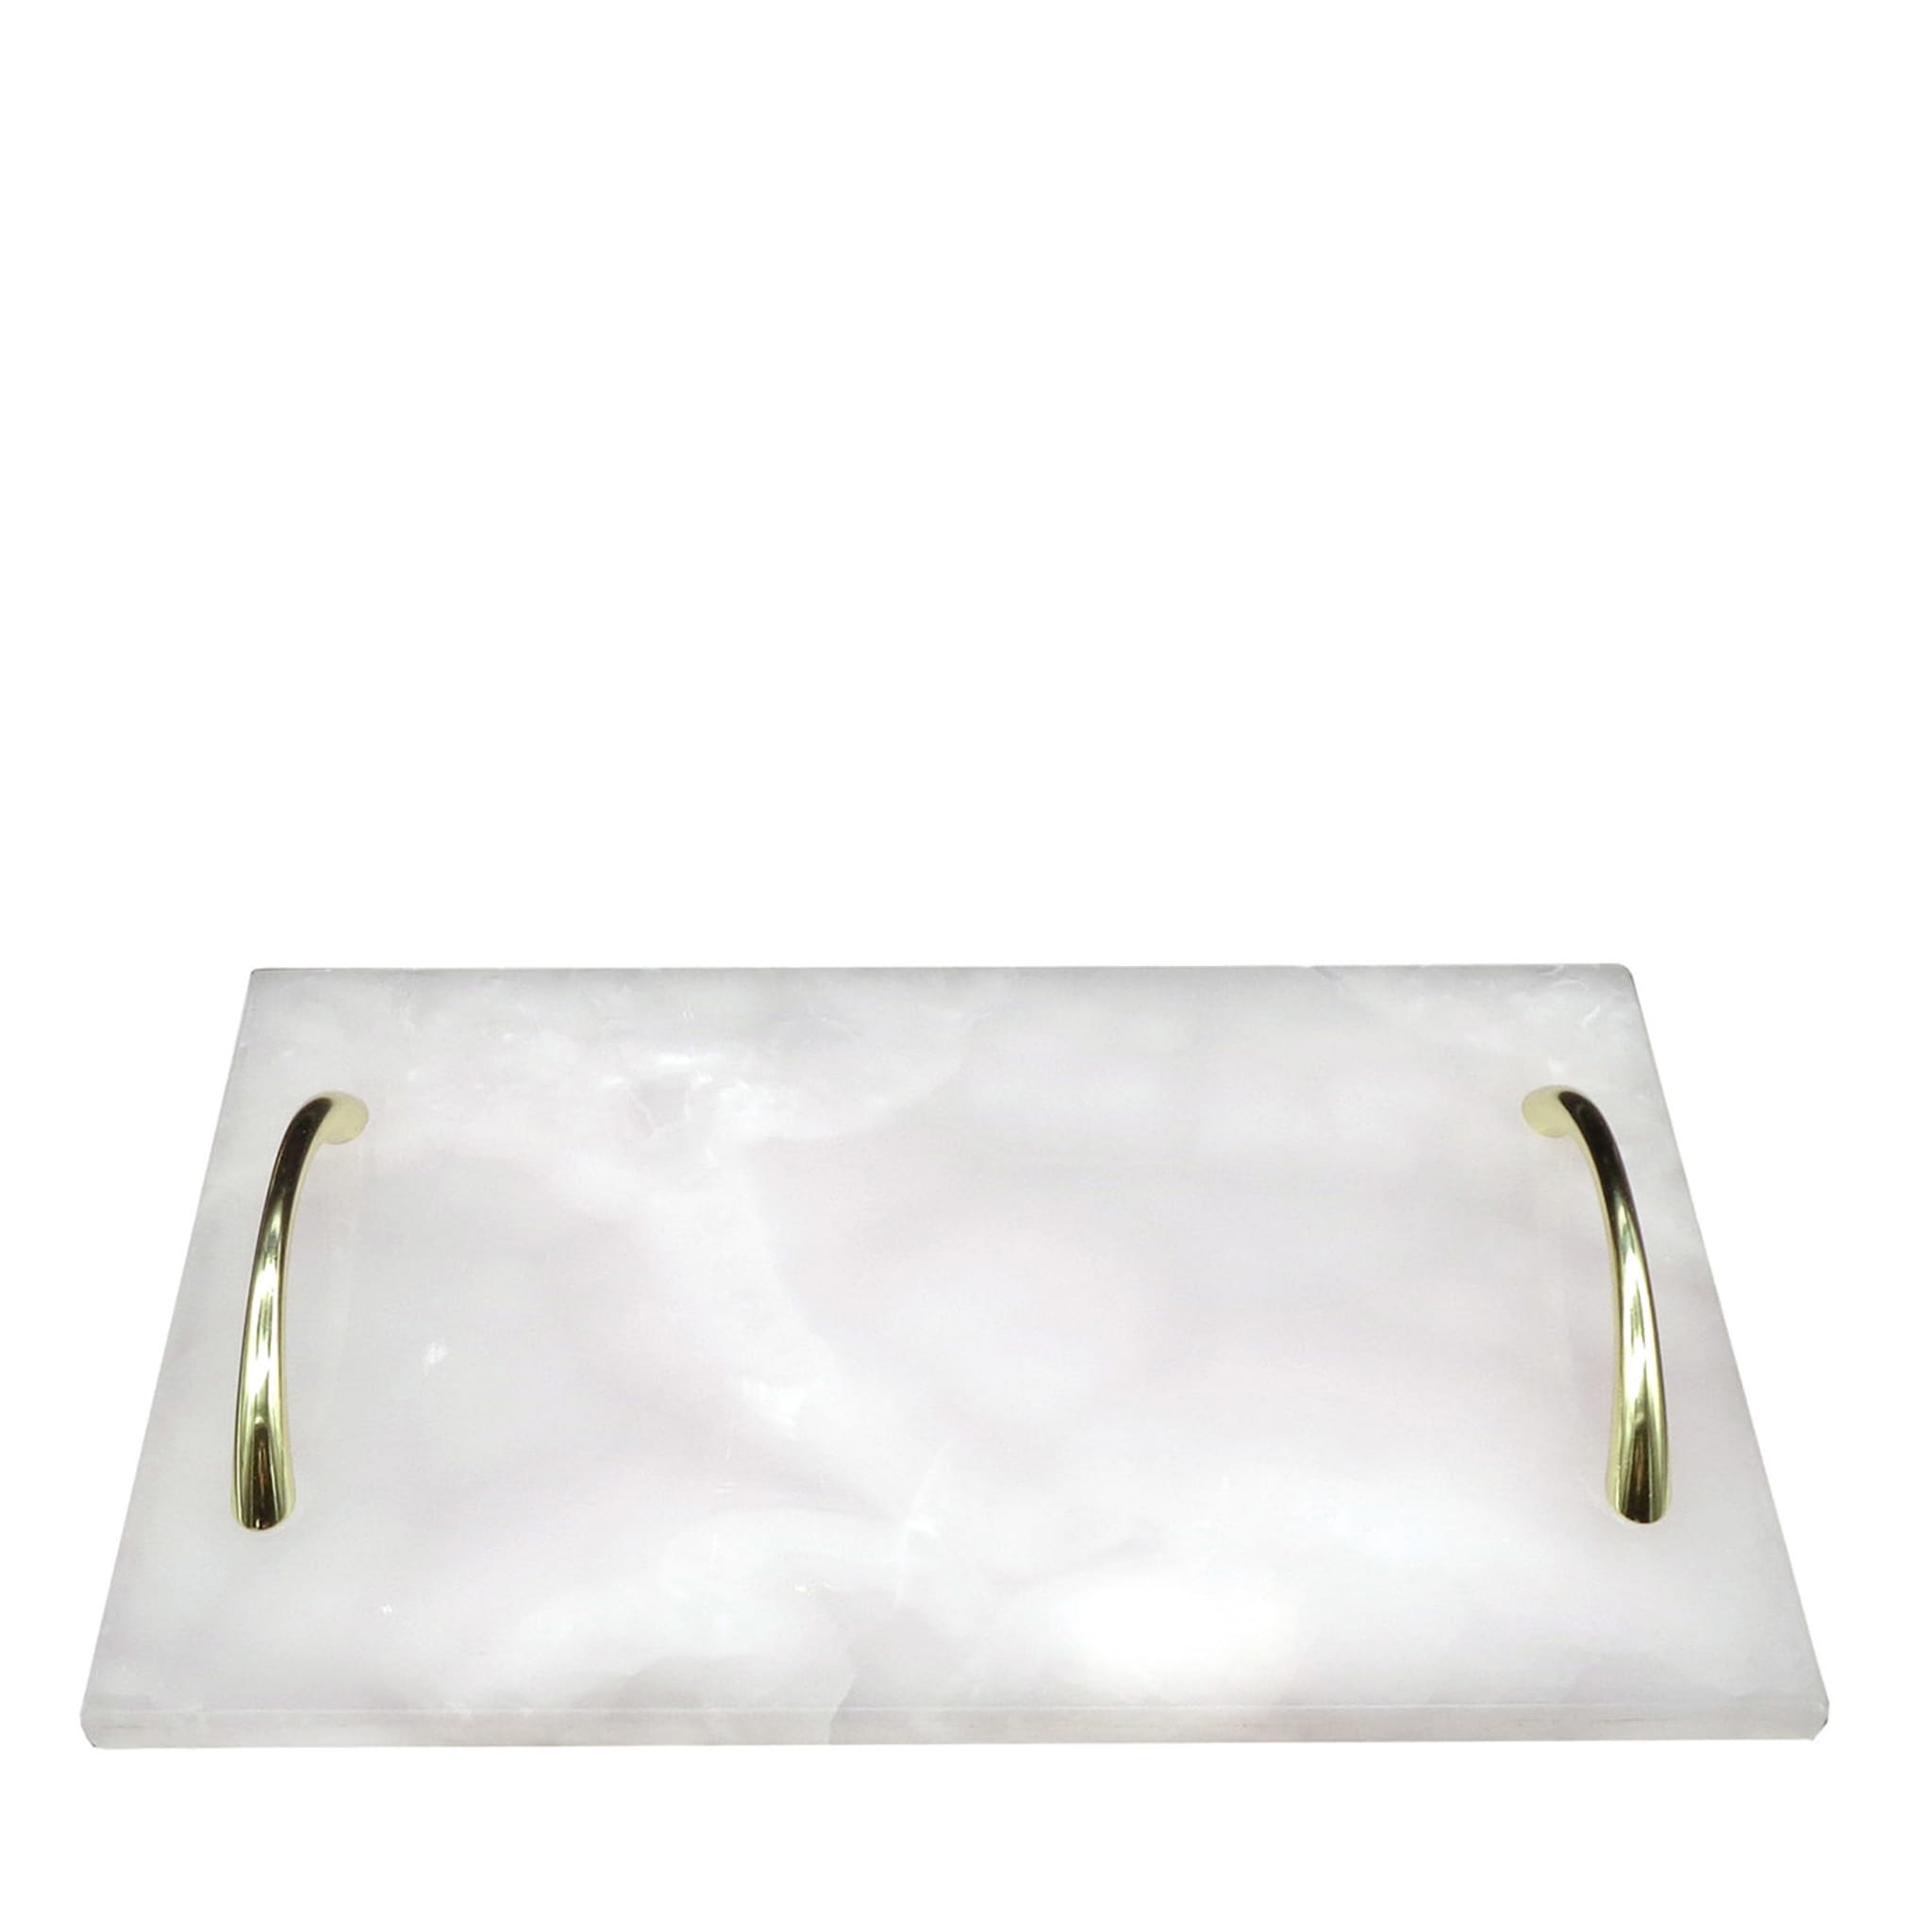 Rectangular White Quartz Tray with Golden Handles - Main view